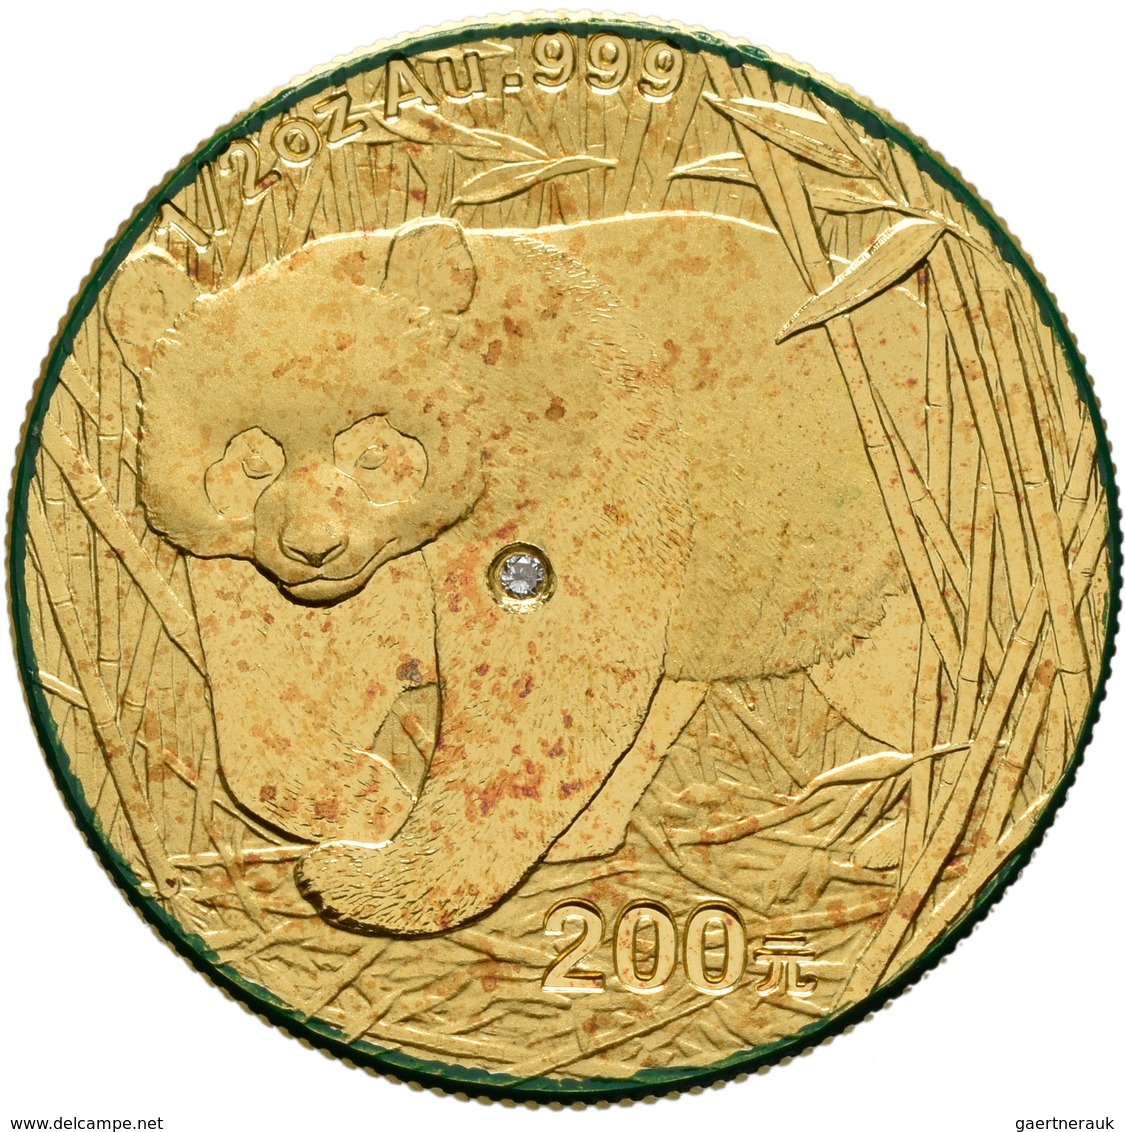 China - Volksrepublik - Anlagegold: Panda Diamond Set: 4-Münzen Set Goldpanda 2002: 1/10 OZ + 1/4 OZ - China